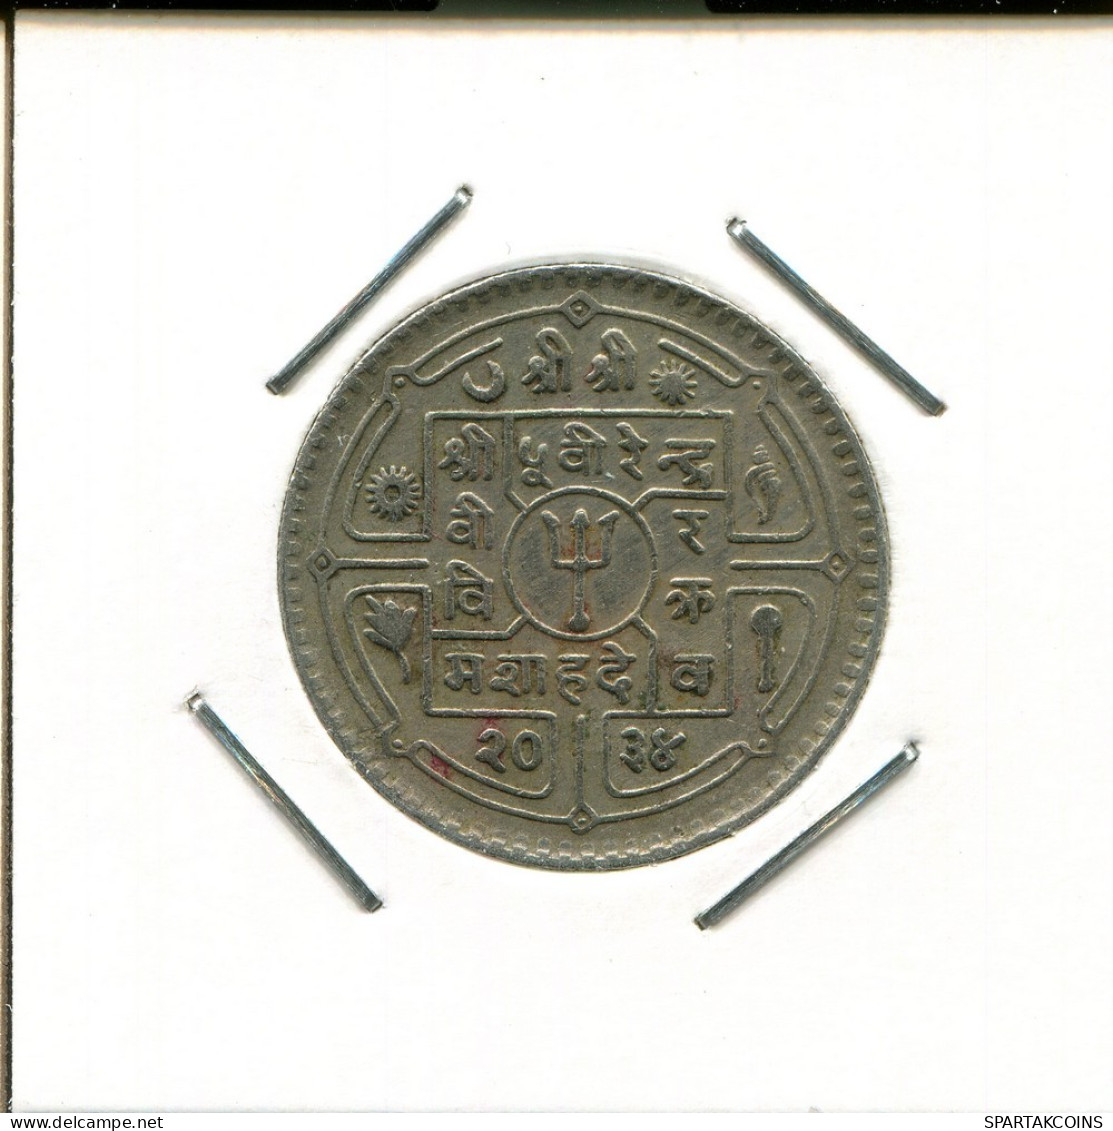 1 RUPEE 1979 NEPAL Coin #AS139.U.A - Nepal